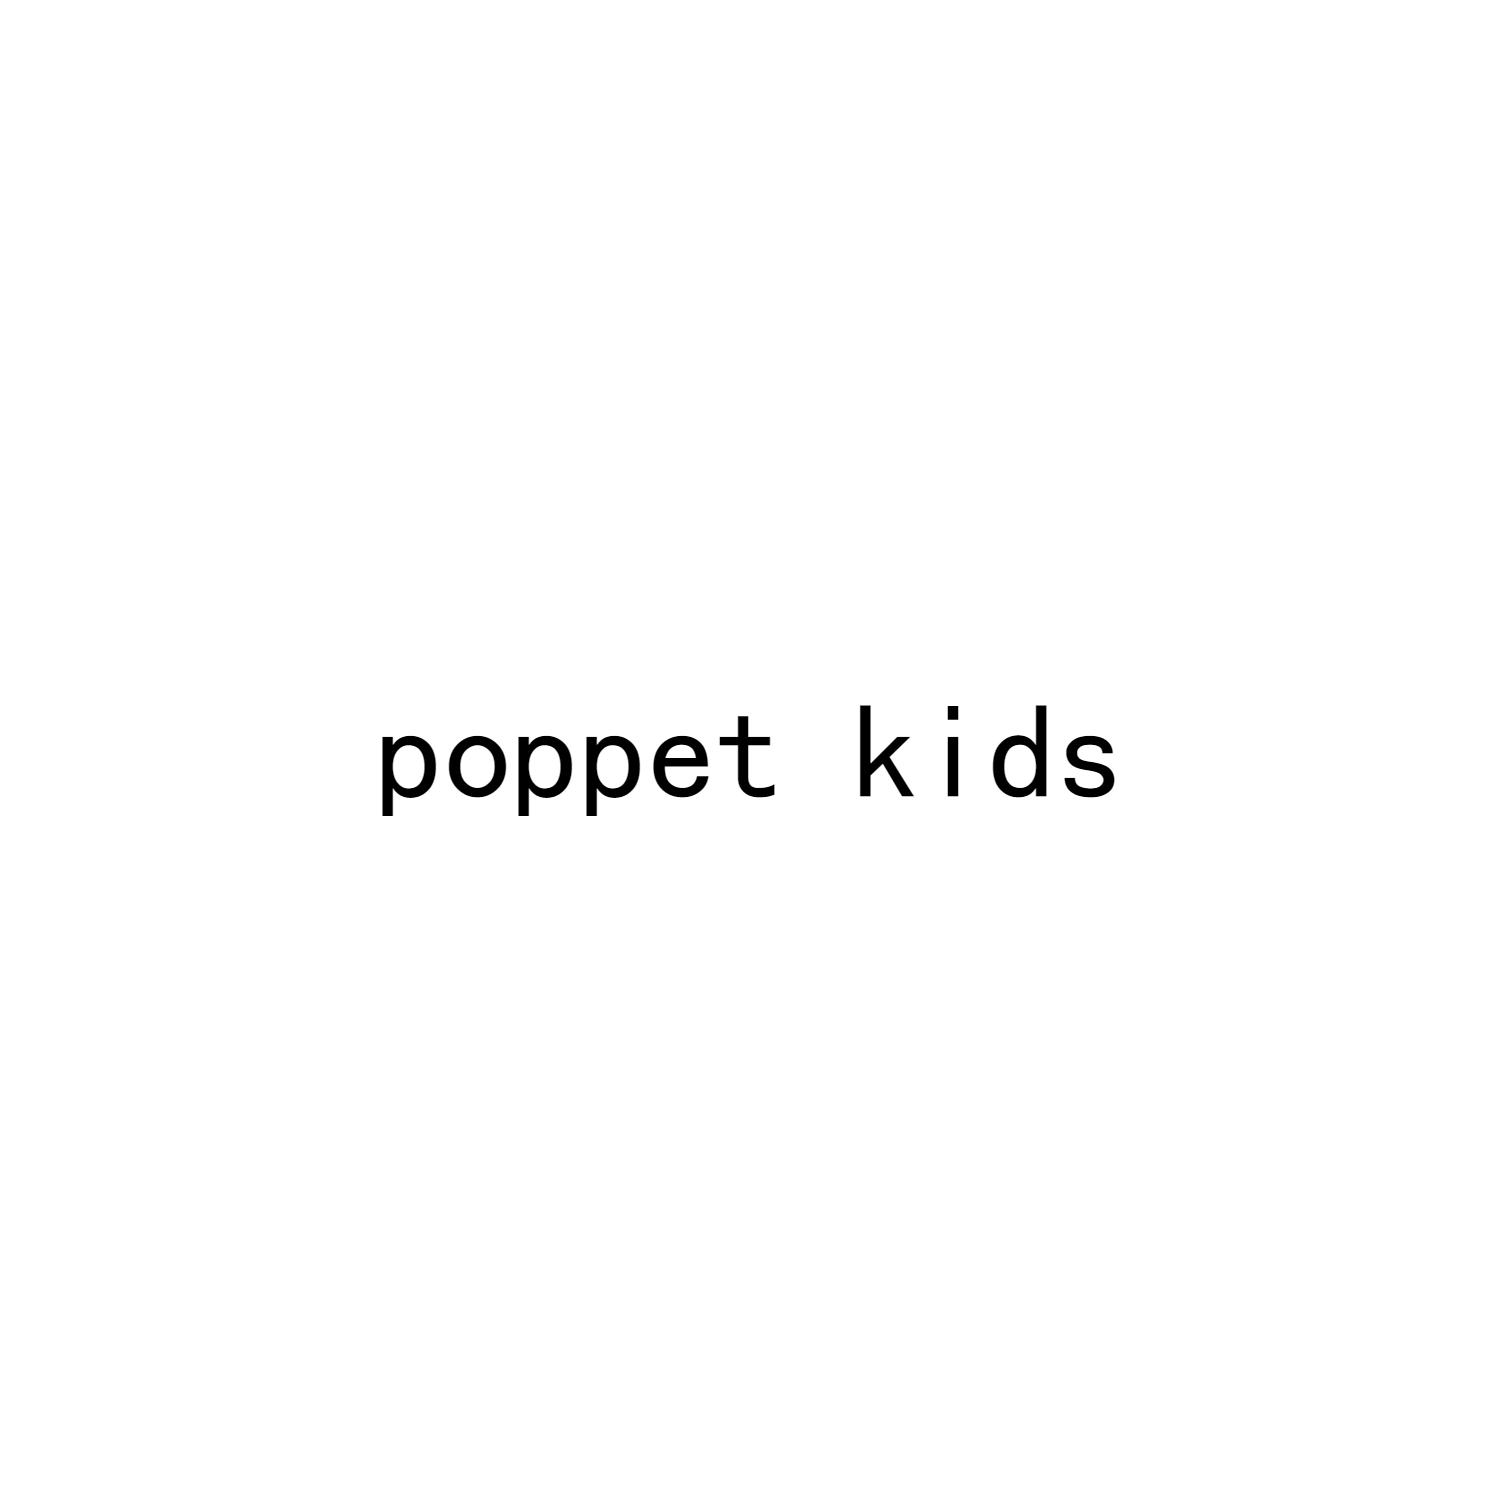 poppet kids